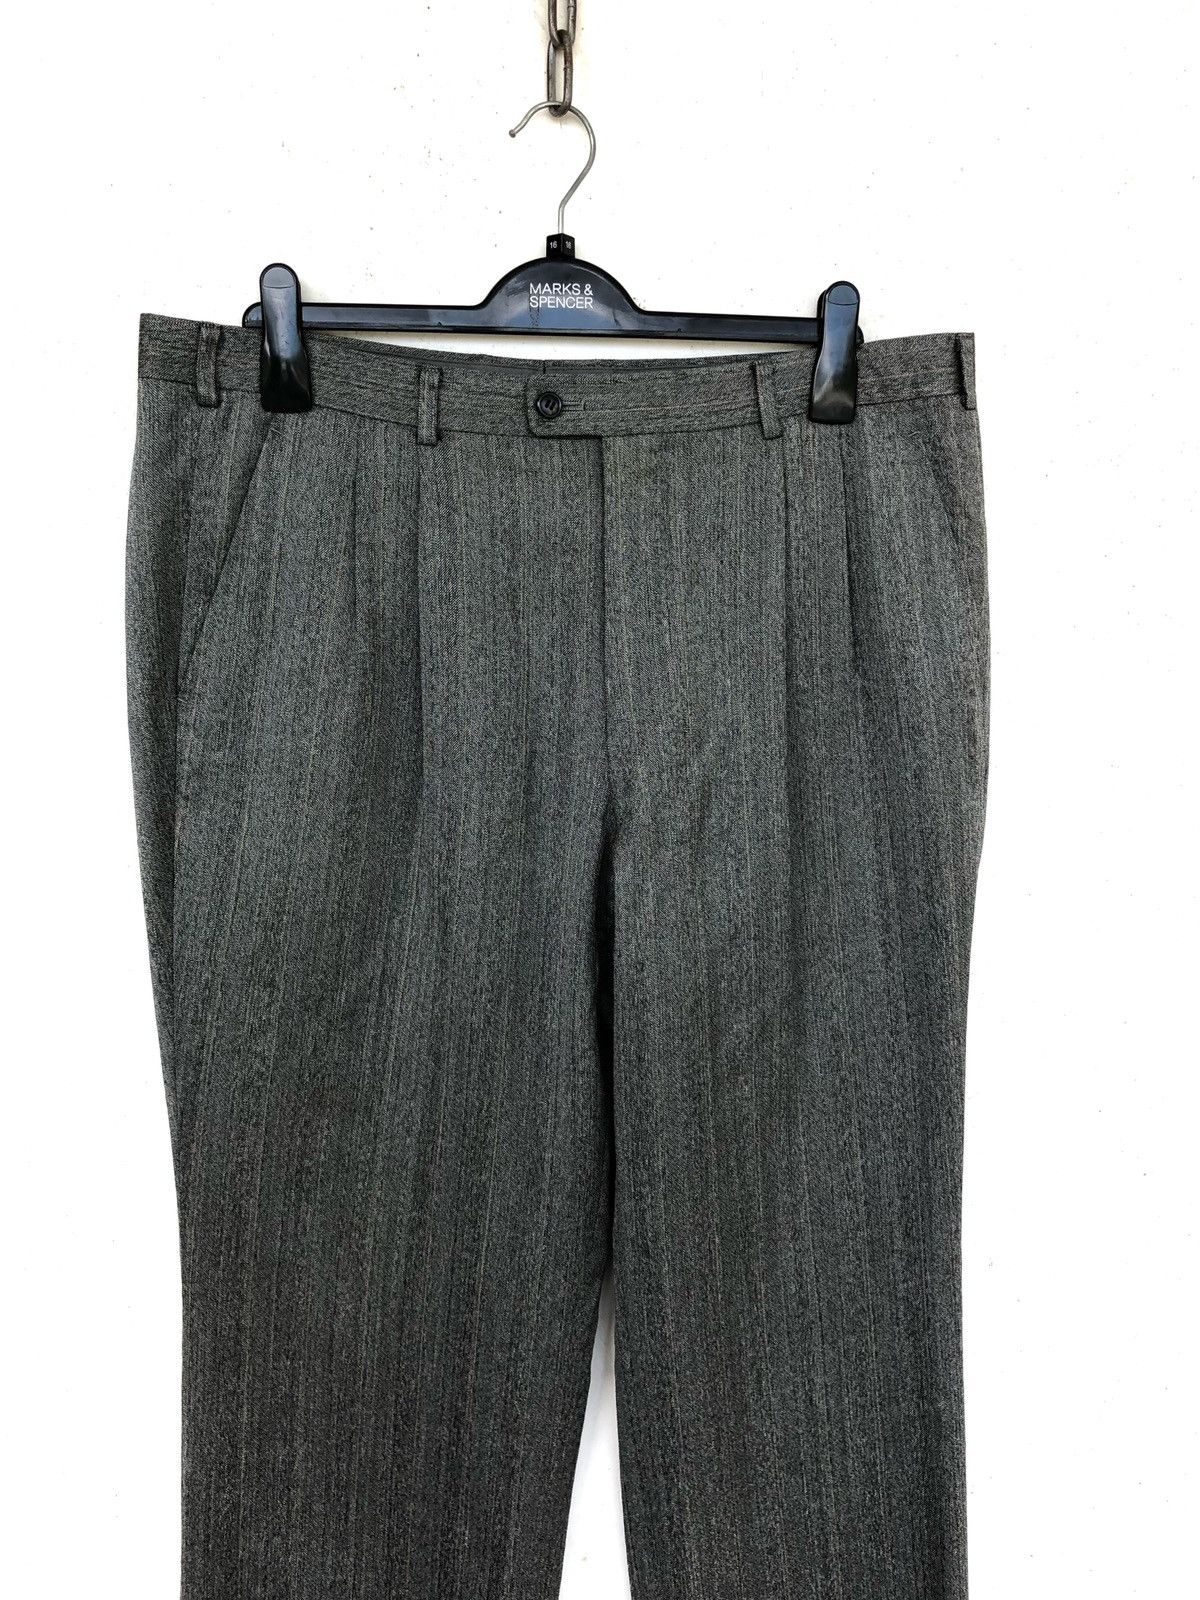 Lanvin GRAIL🔥Lanvin Paris Grey Striped Wool Oversized Baggy Pants Size US 38 / EU 54 - 3 Thumbnail